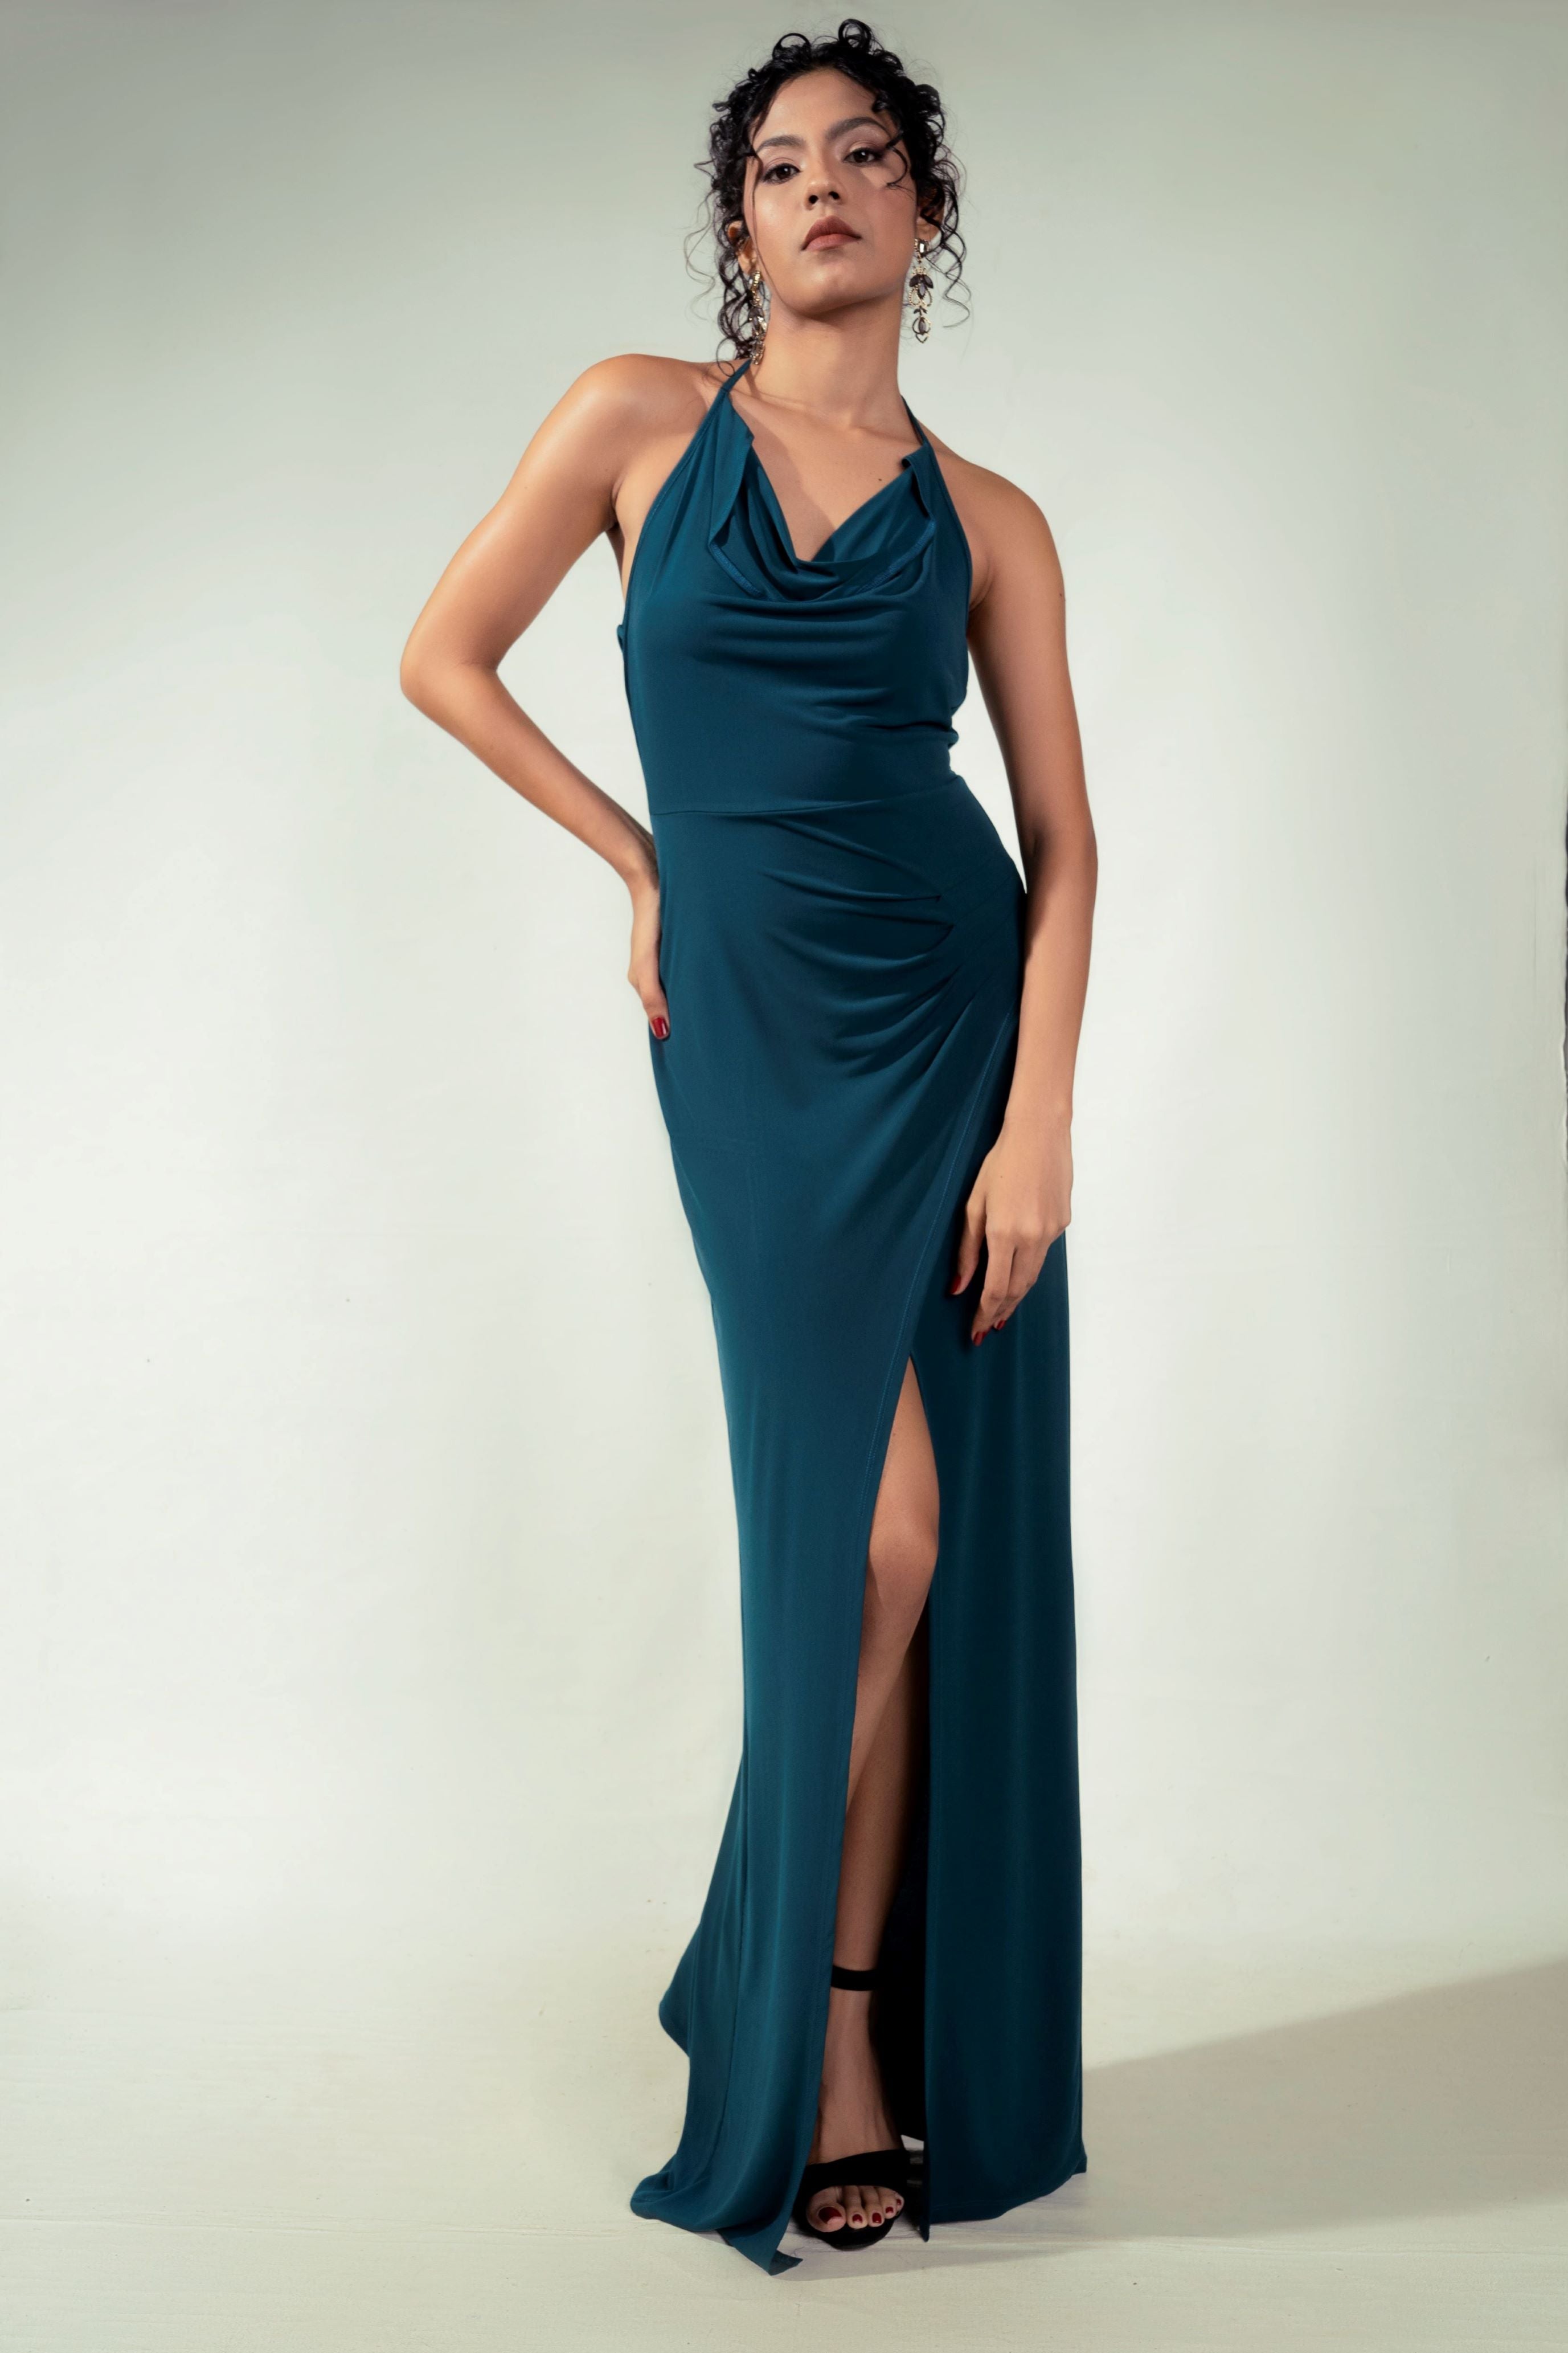 Anastasia cowl necked halter dress - Avirate Sri Lanka